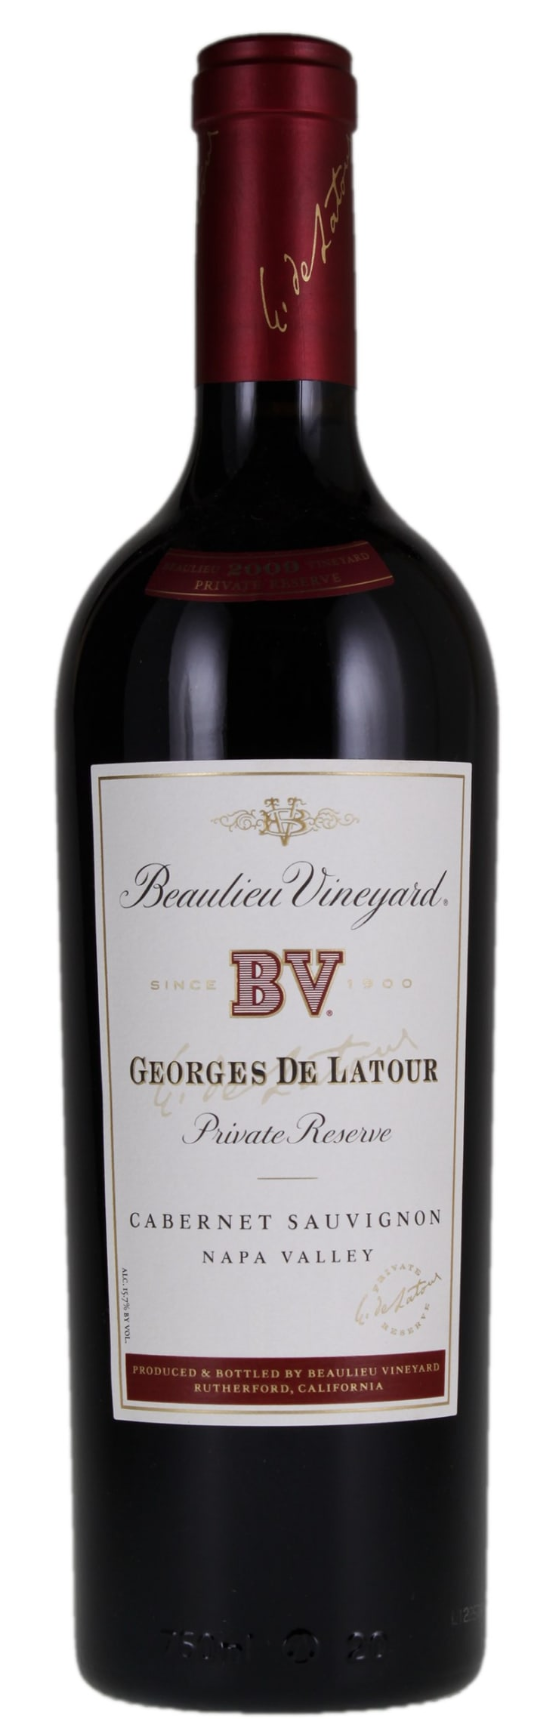 2007 | Beaulieu Vineyard | George de Latour Private Reserve Cabernet Sauvignon